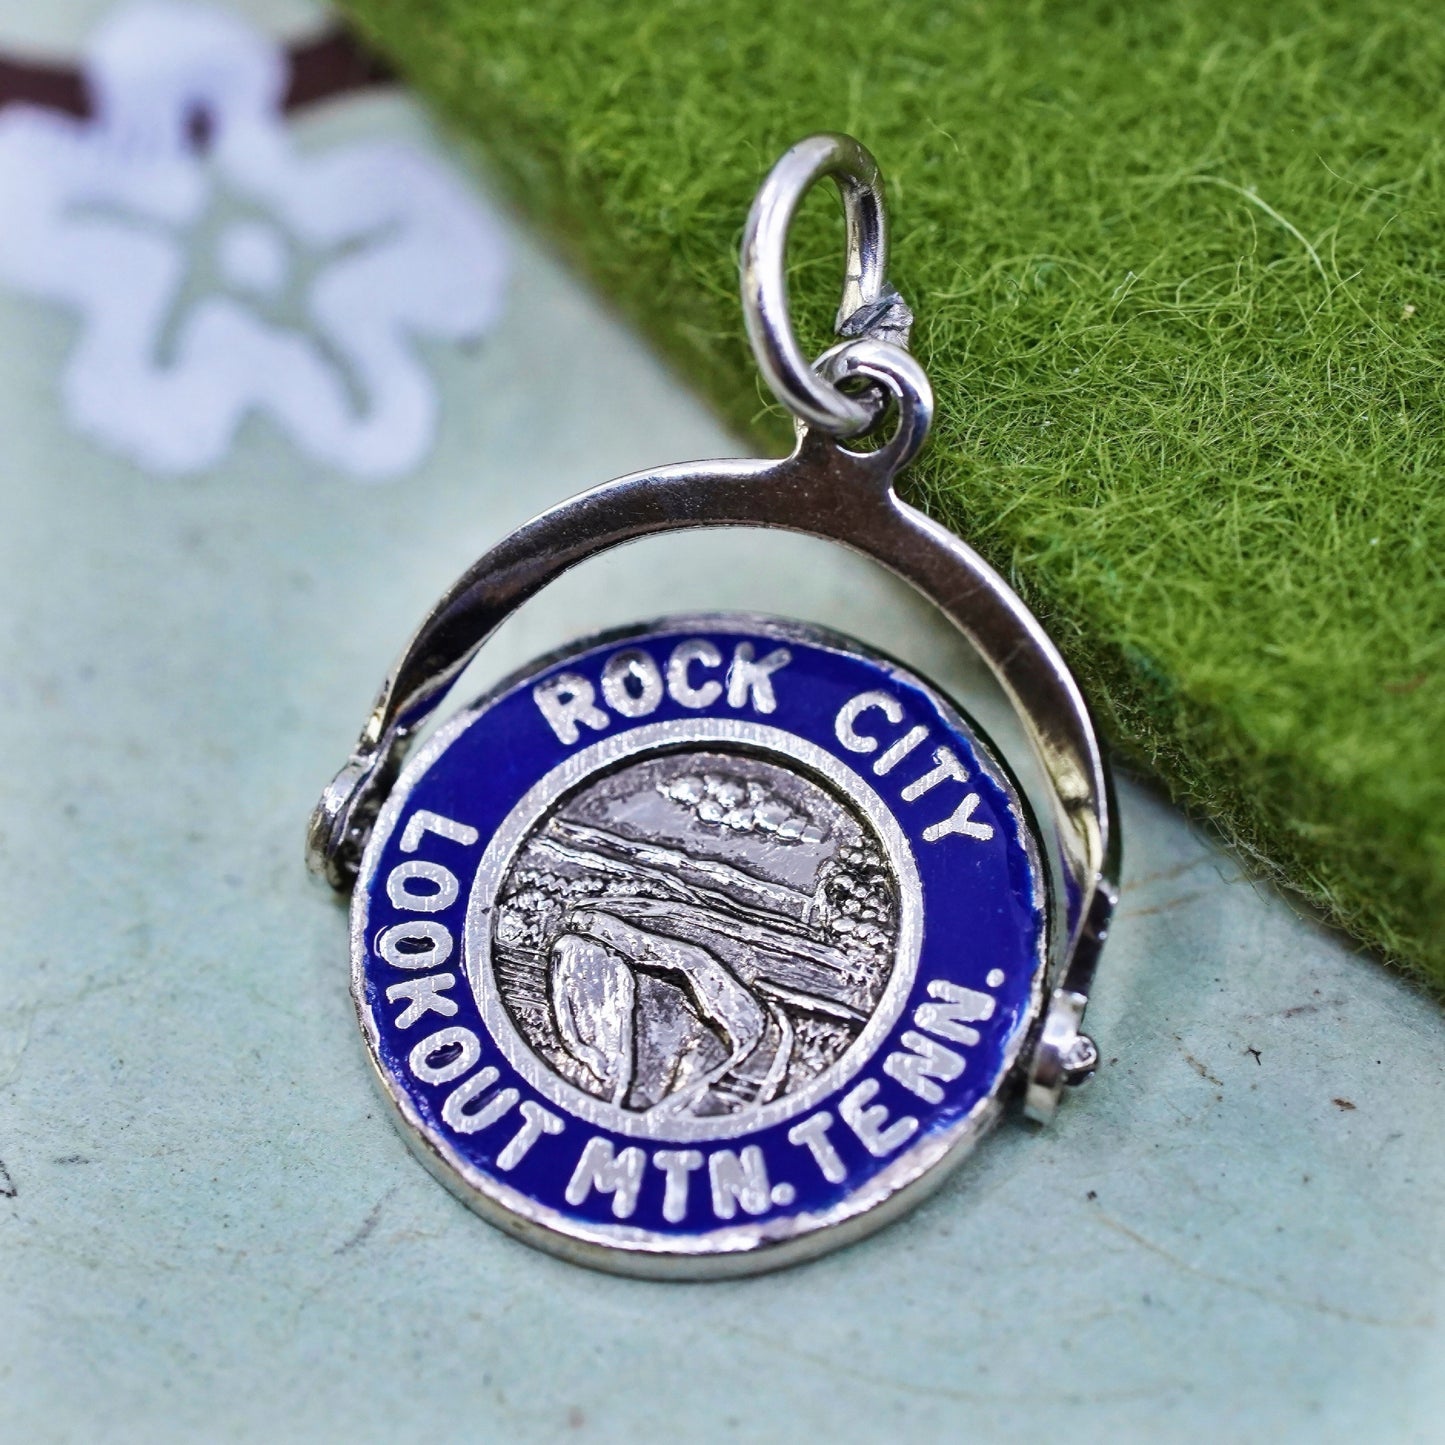 sterling silver pendant, 925 enamel tag charm “Rock City lookout Mtn. Tenn.”